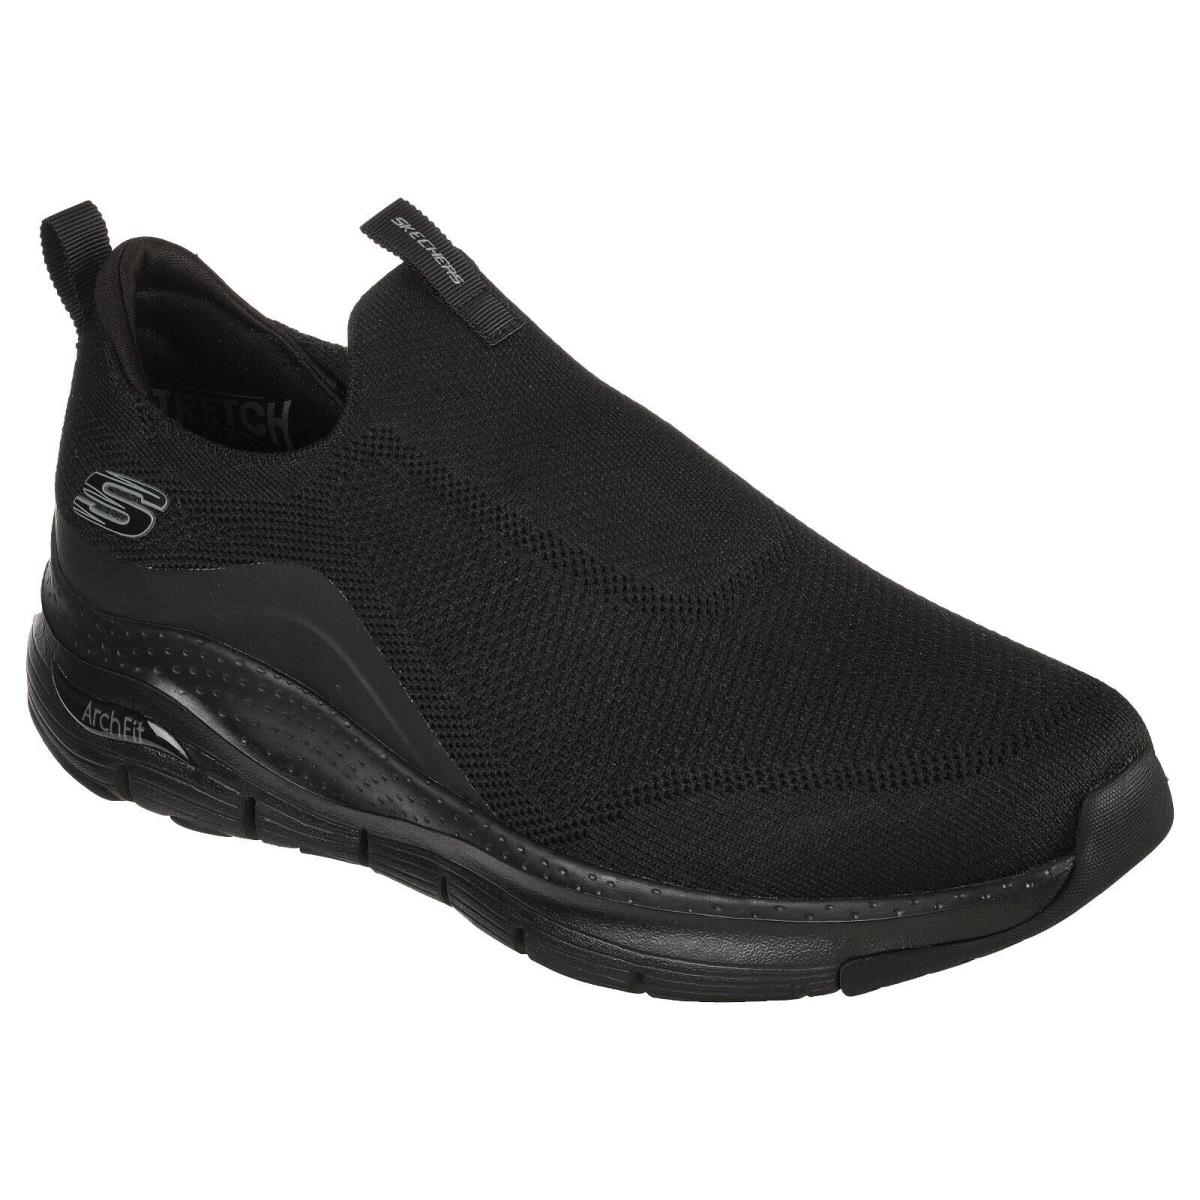 Skechers Arch Fit Shoes Black Men Sport Comfort Casual Slip On Knit Mesh 232201